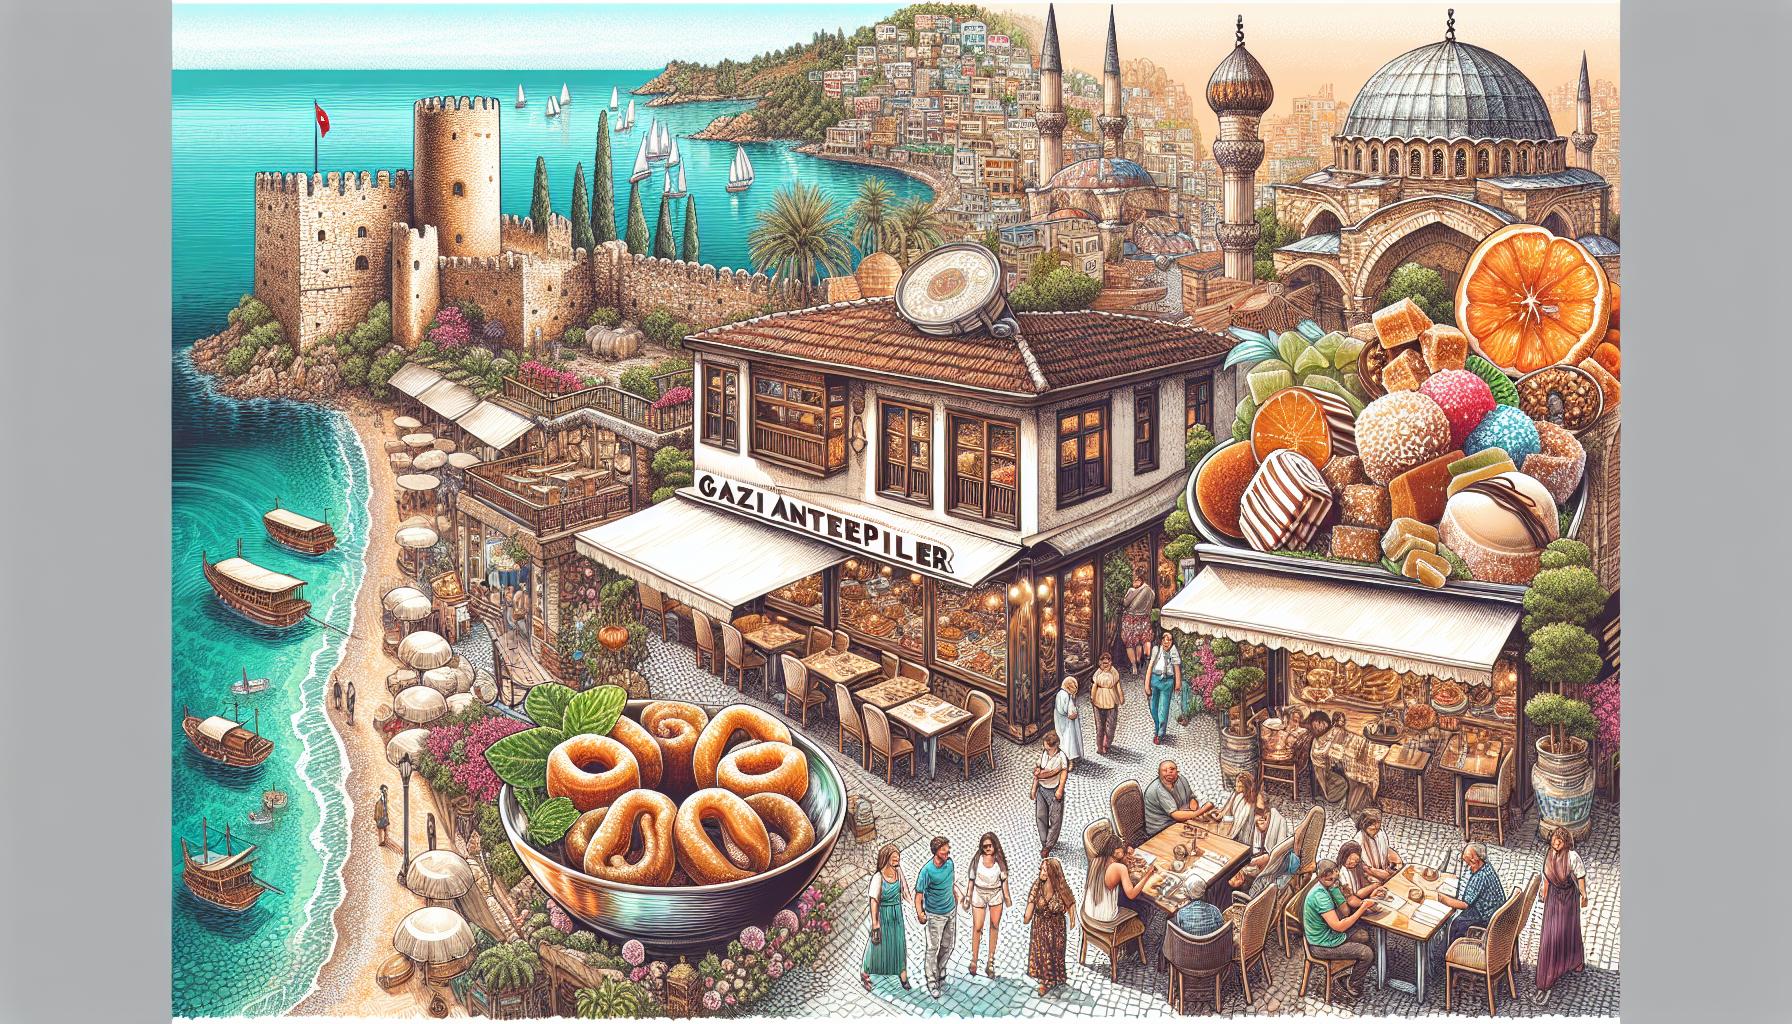 Enjoy Turkish Delights at Antalya Gaziantepliler Restaurant: A Must-Visit!